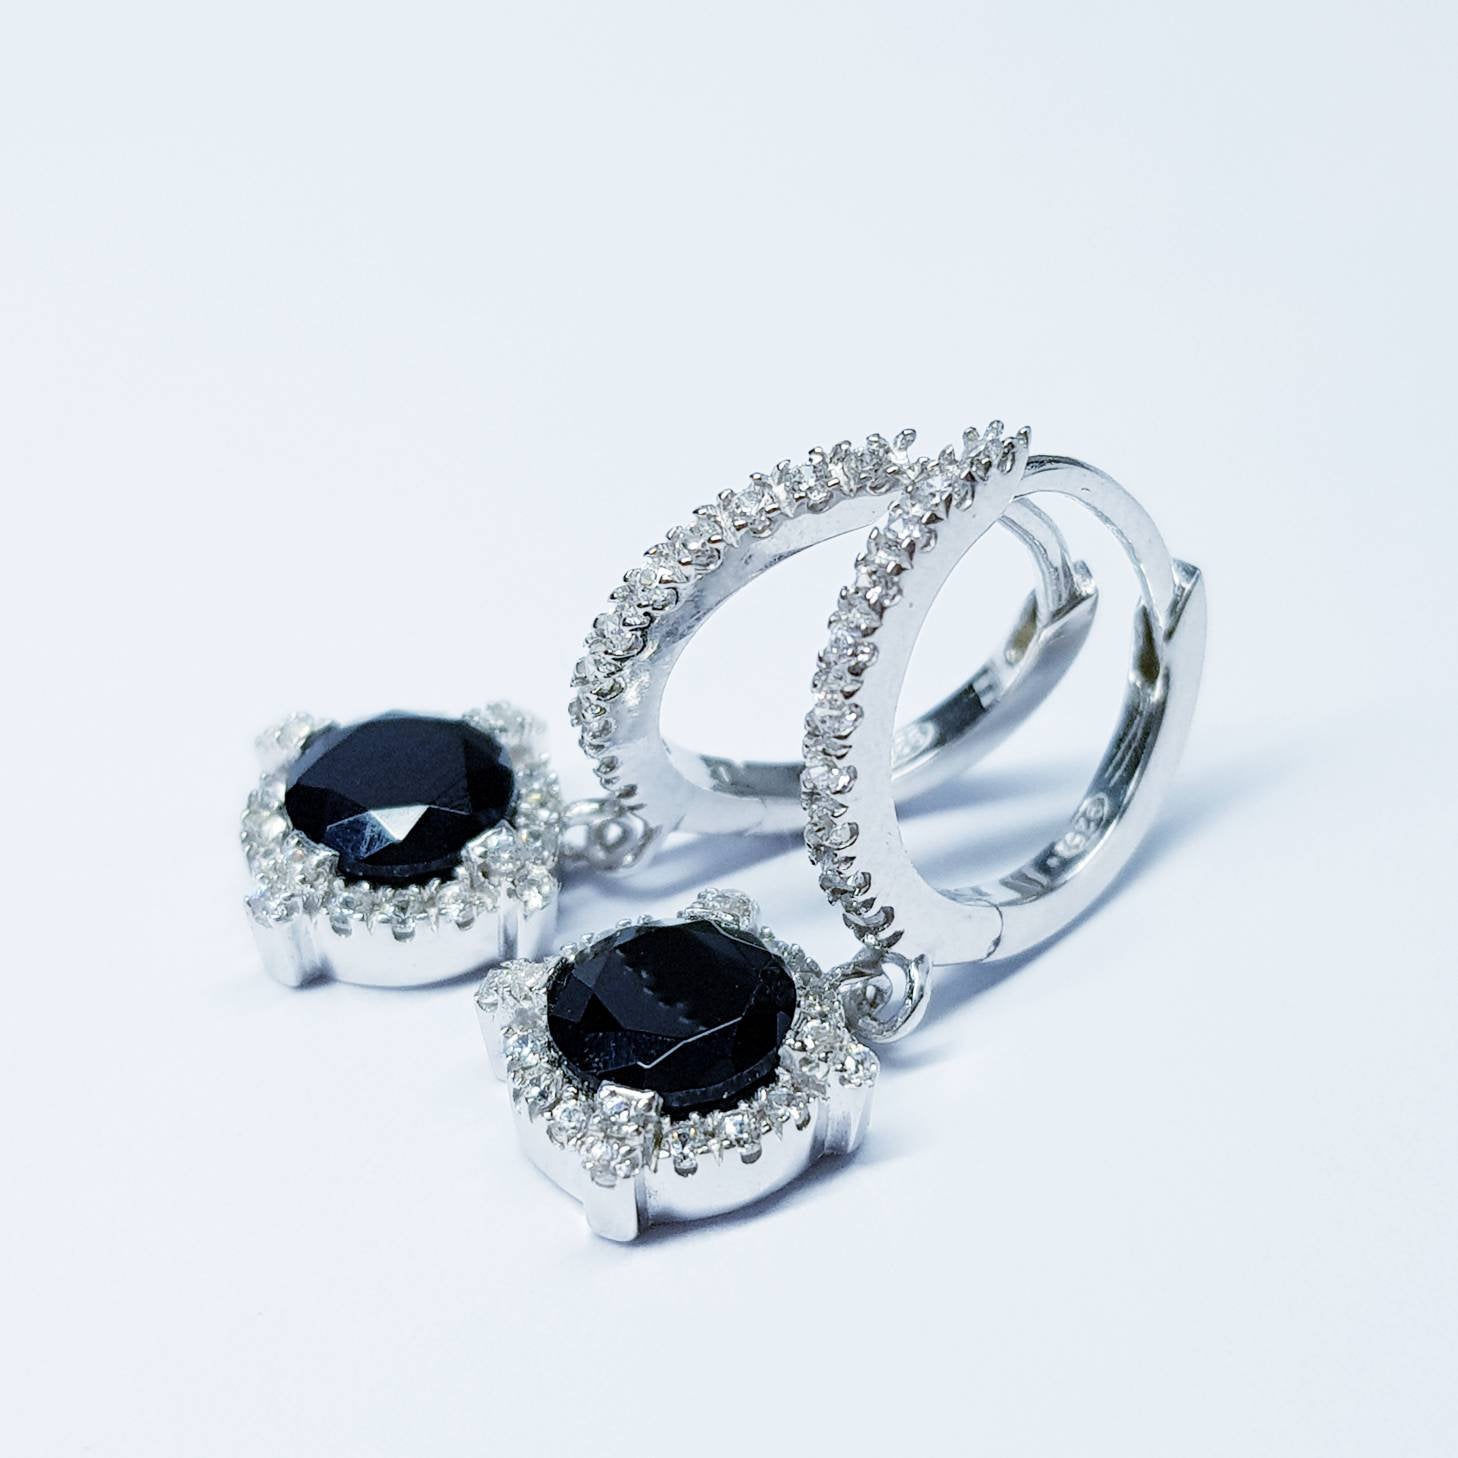 Black drop Earring studs, hoop earrings, classic black earrings, vintage black earrings, elegant jewelry